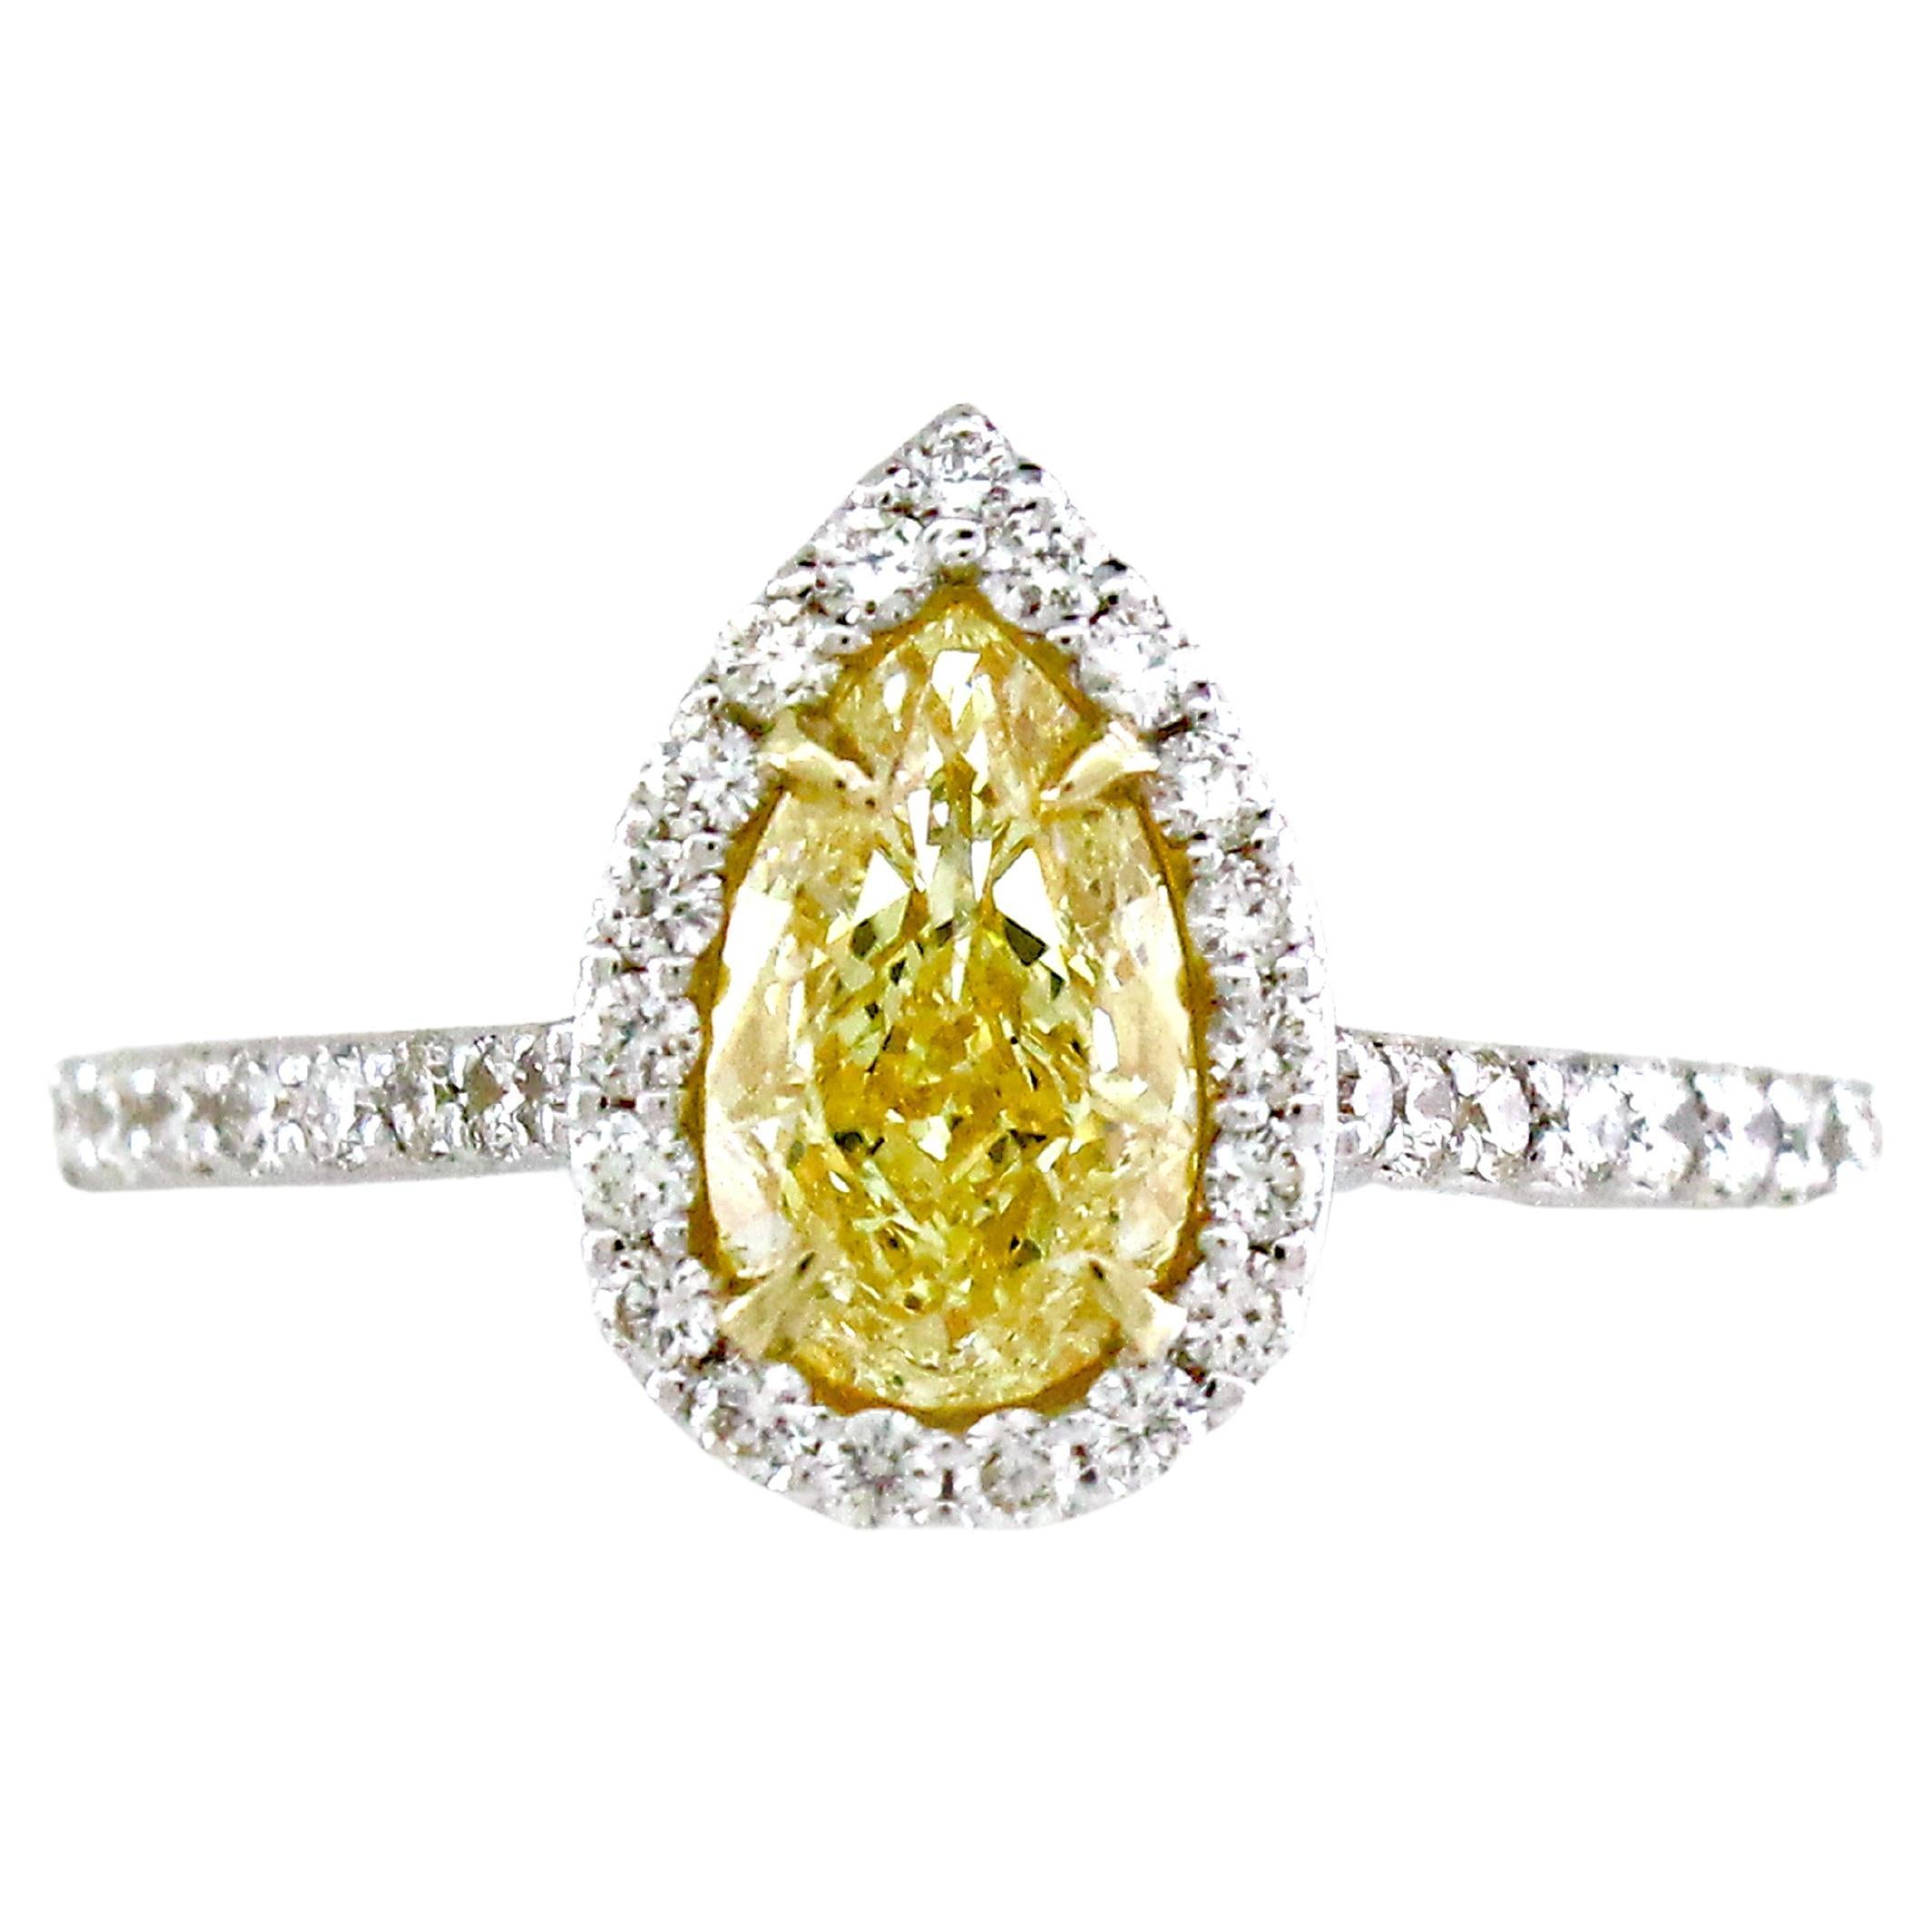 Yellow Pear-Shaped GIA certified Diamond Ring